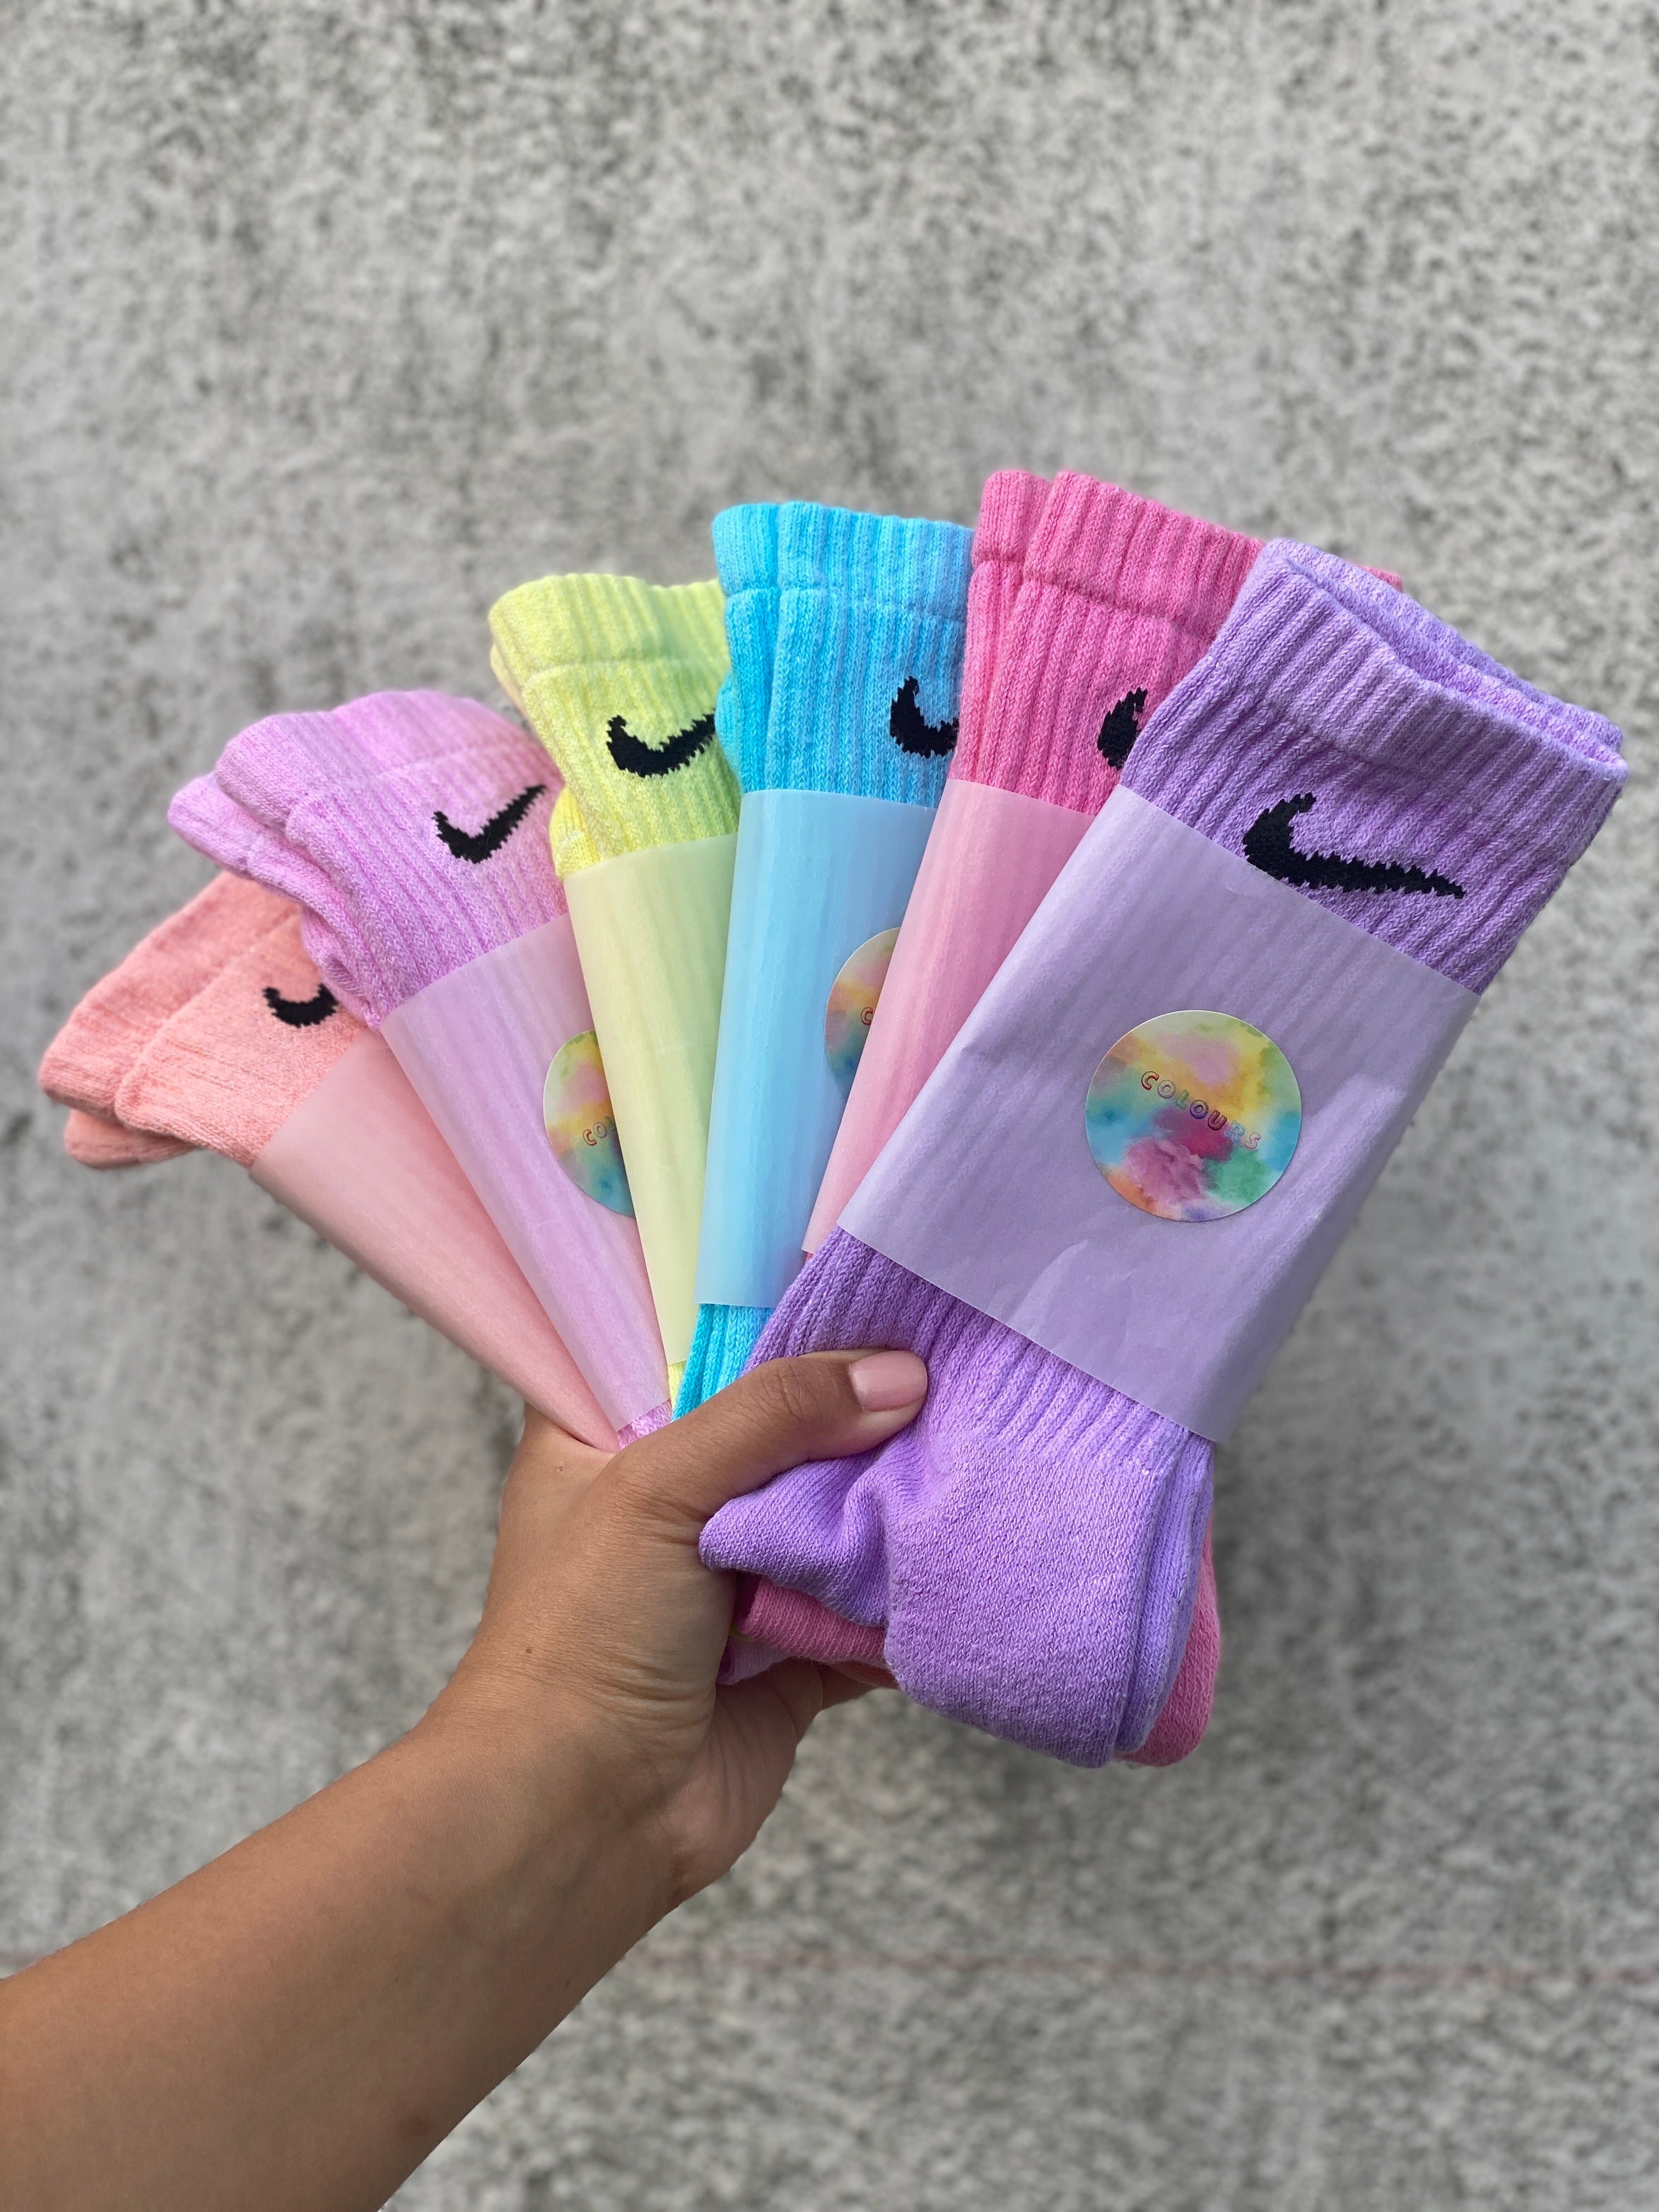 Chaussettes Nike Pastel teintes à la main / Nike dyed Socks